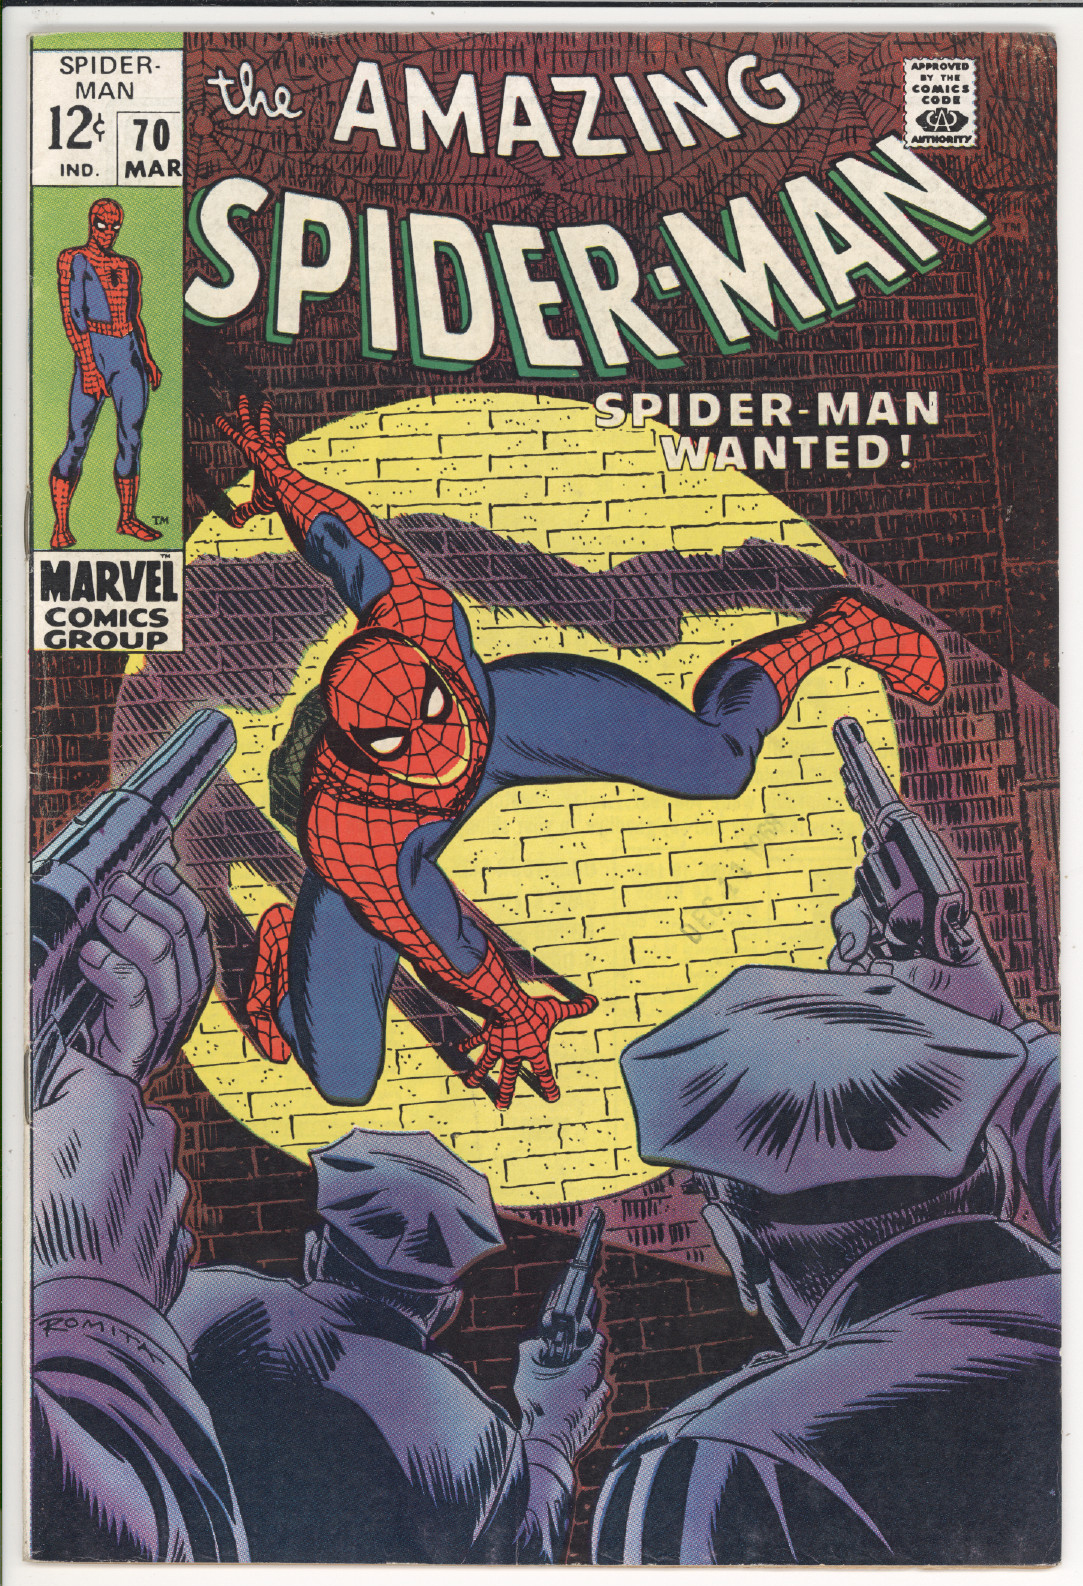 Amazing Spider-Man #70 front